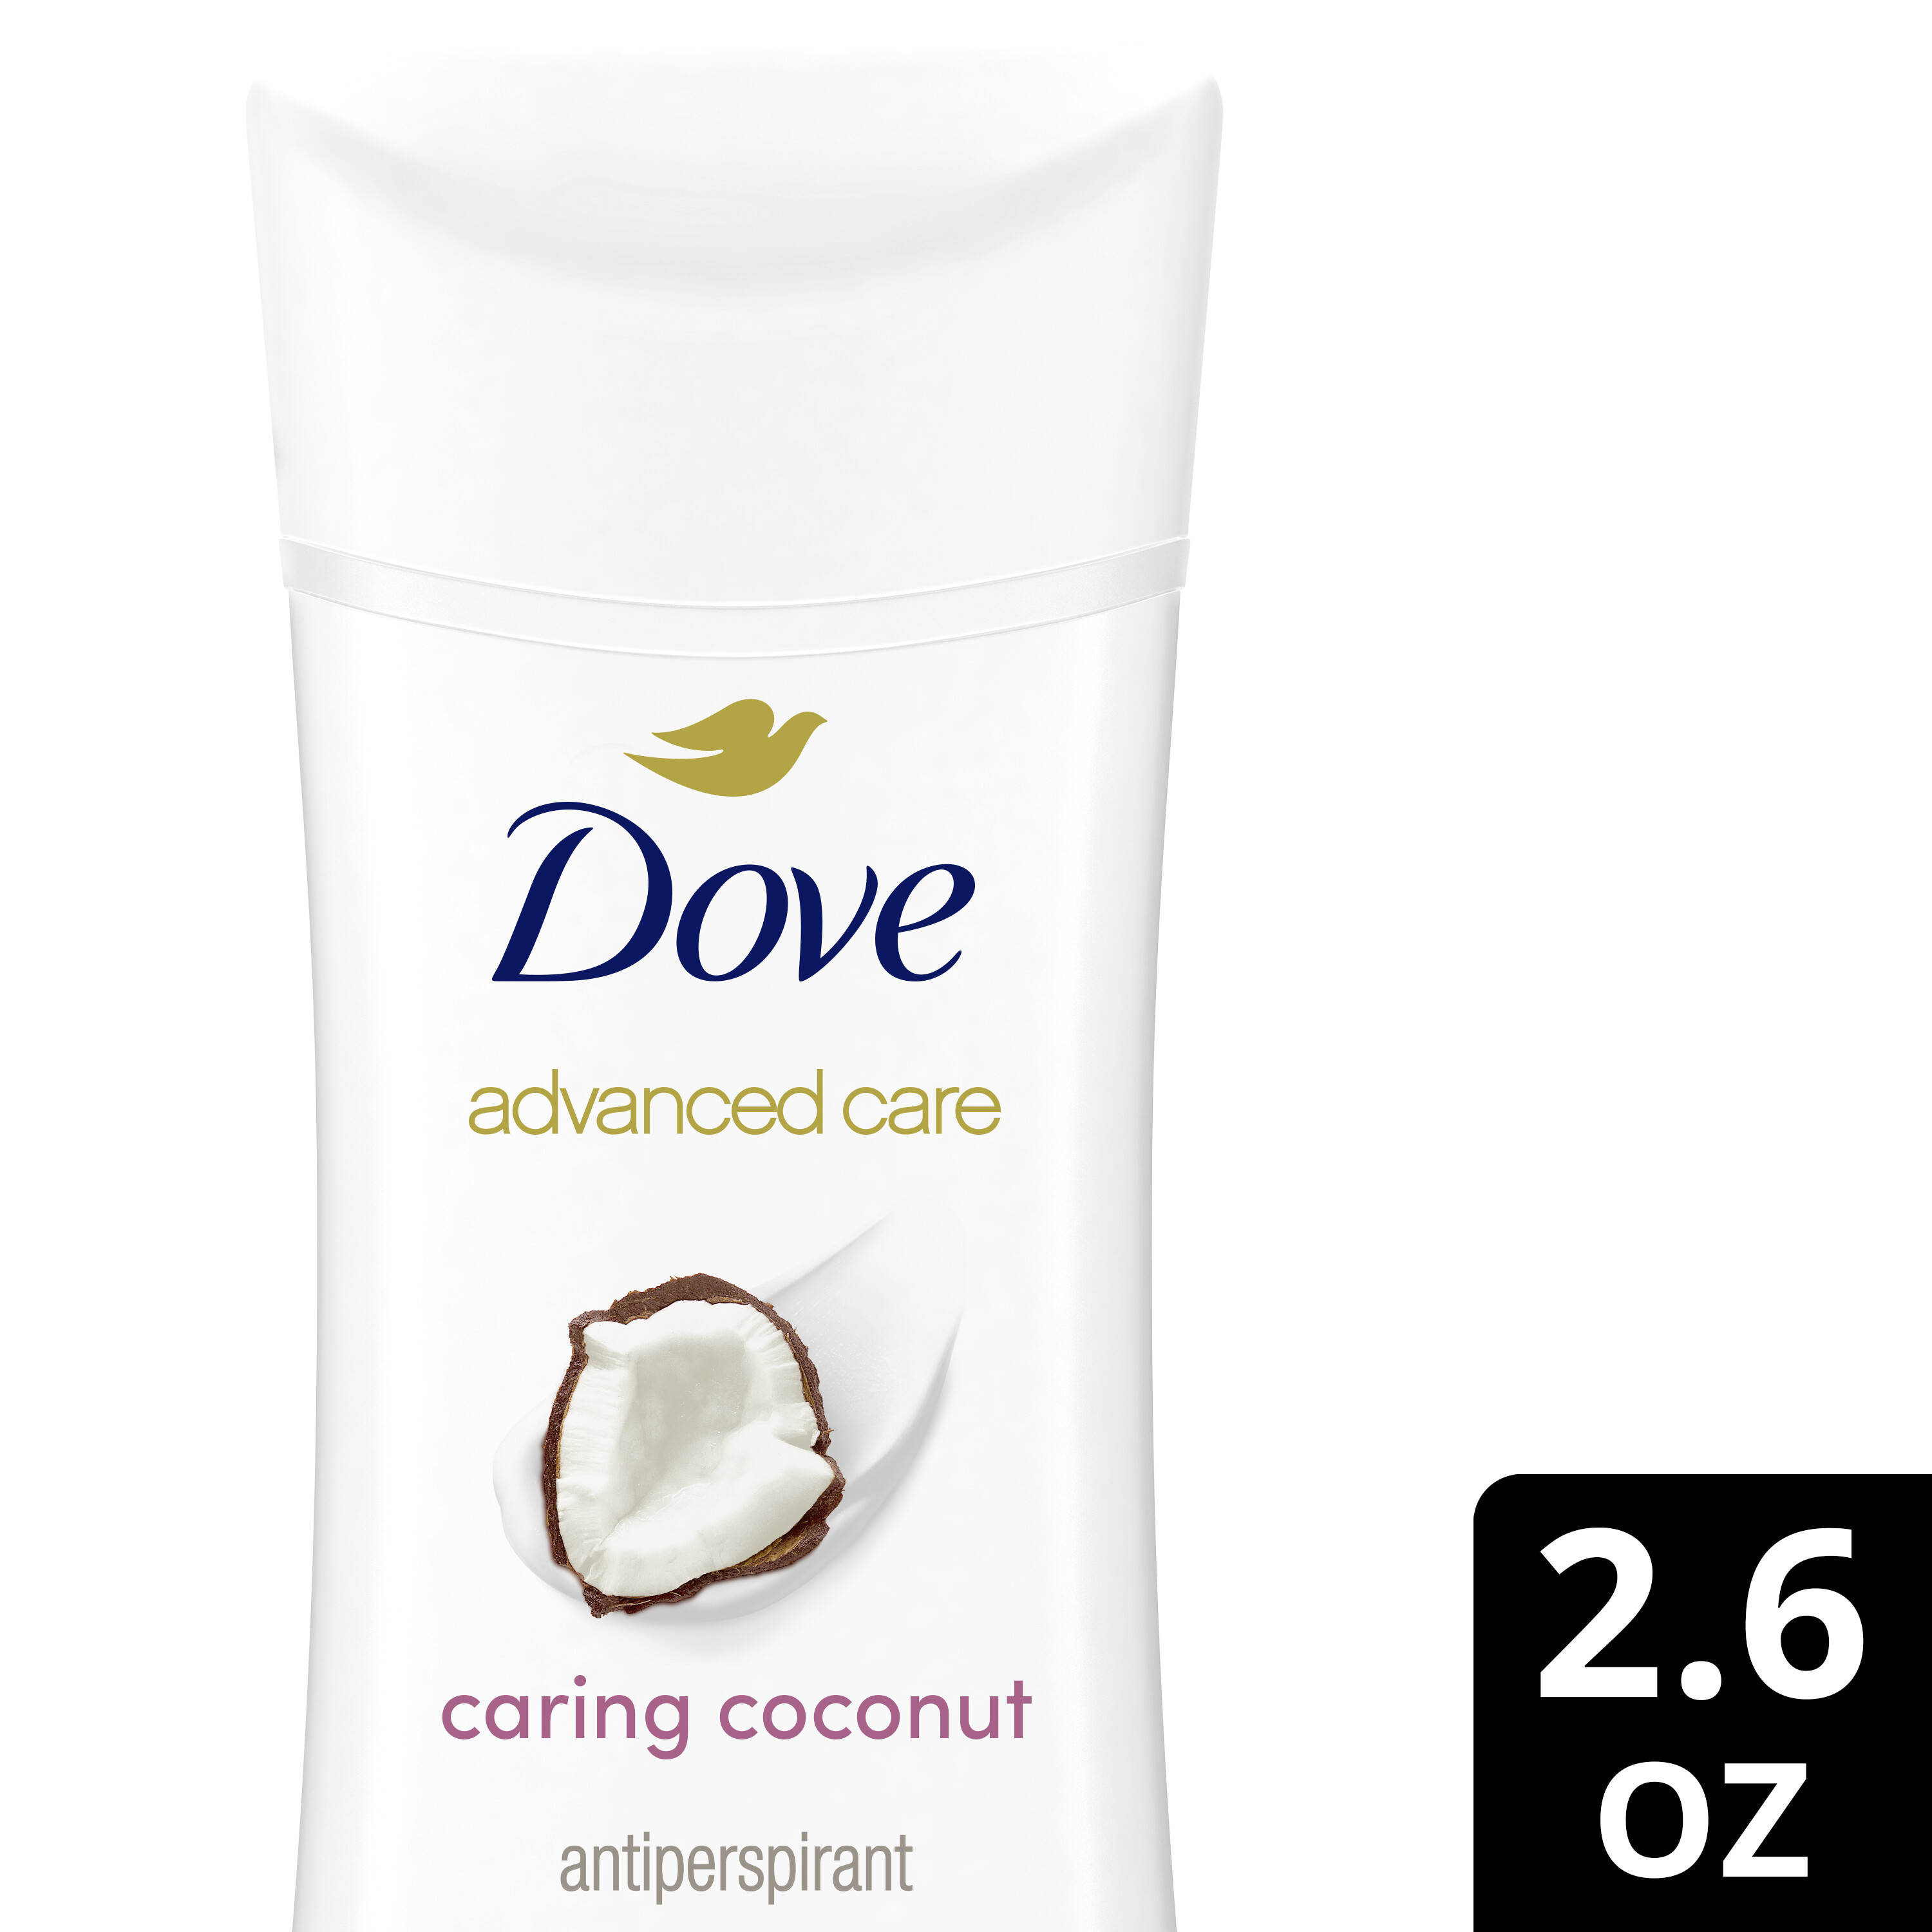 Dove Advanced Care Long Lasting Women's Antiperspirant Deodorant Stick, Caring Coconut, 2.6 oz - image 2 of 9